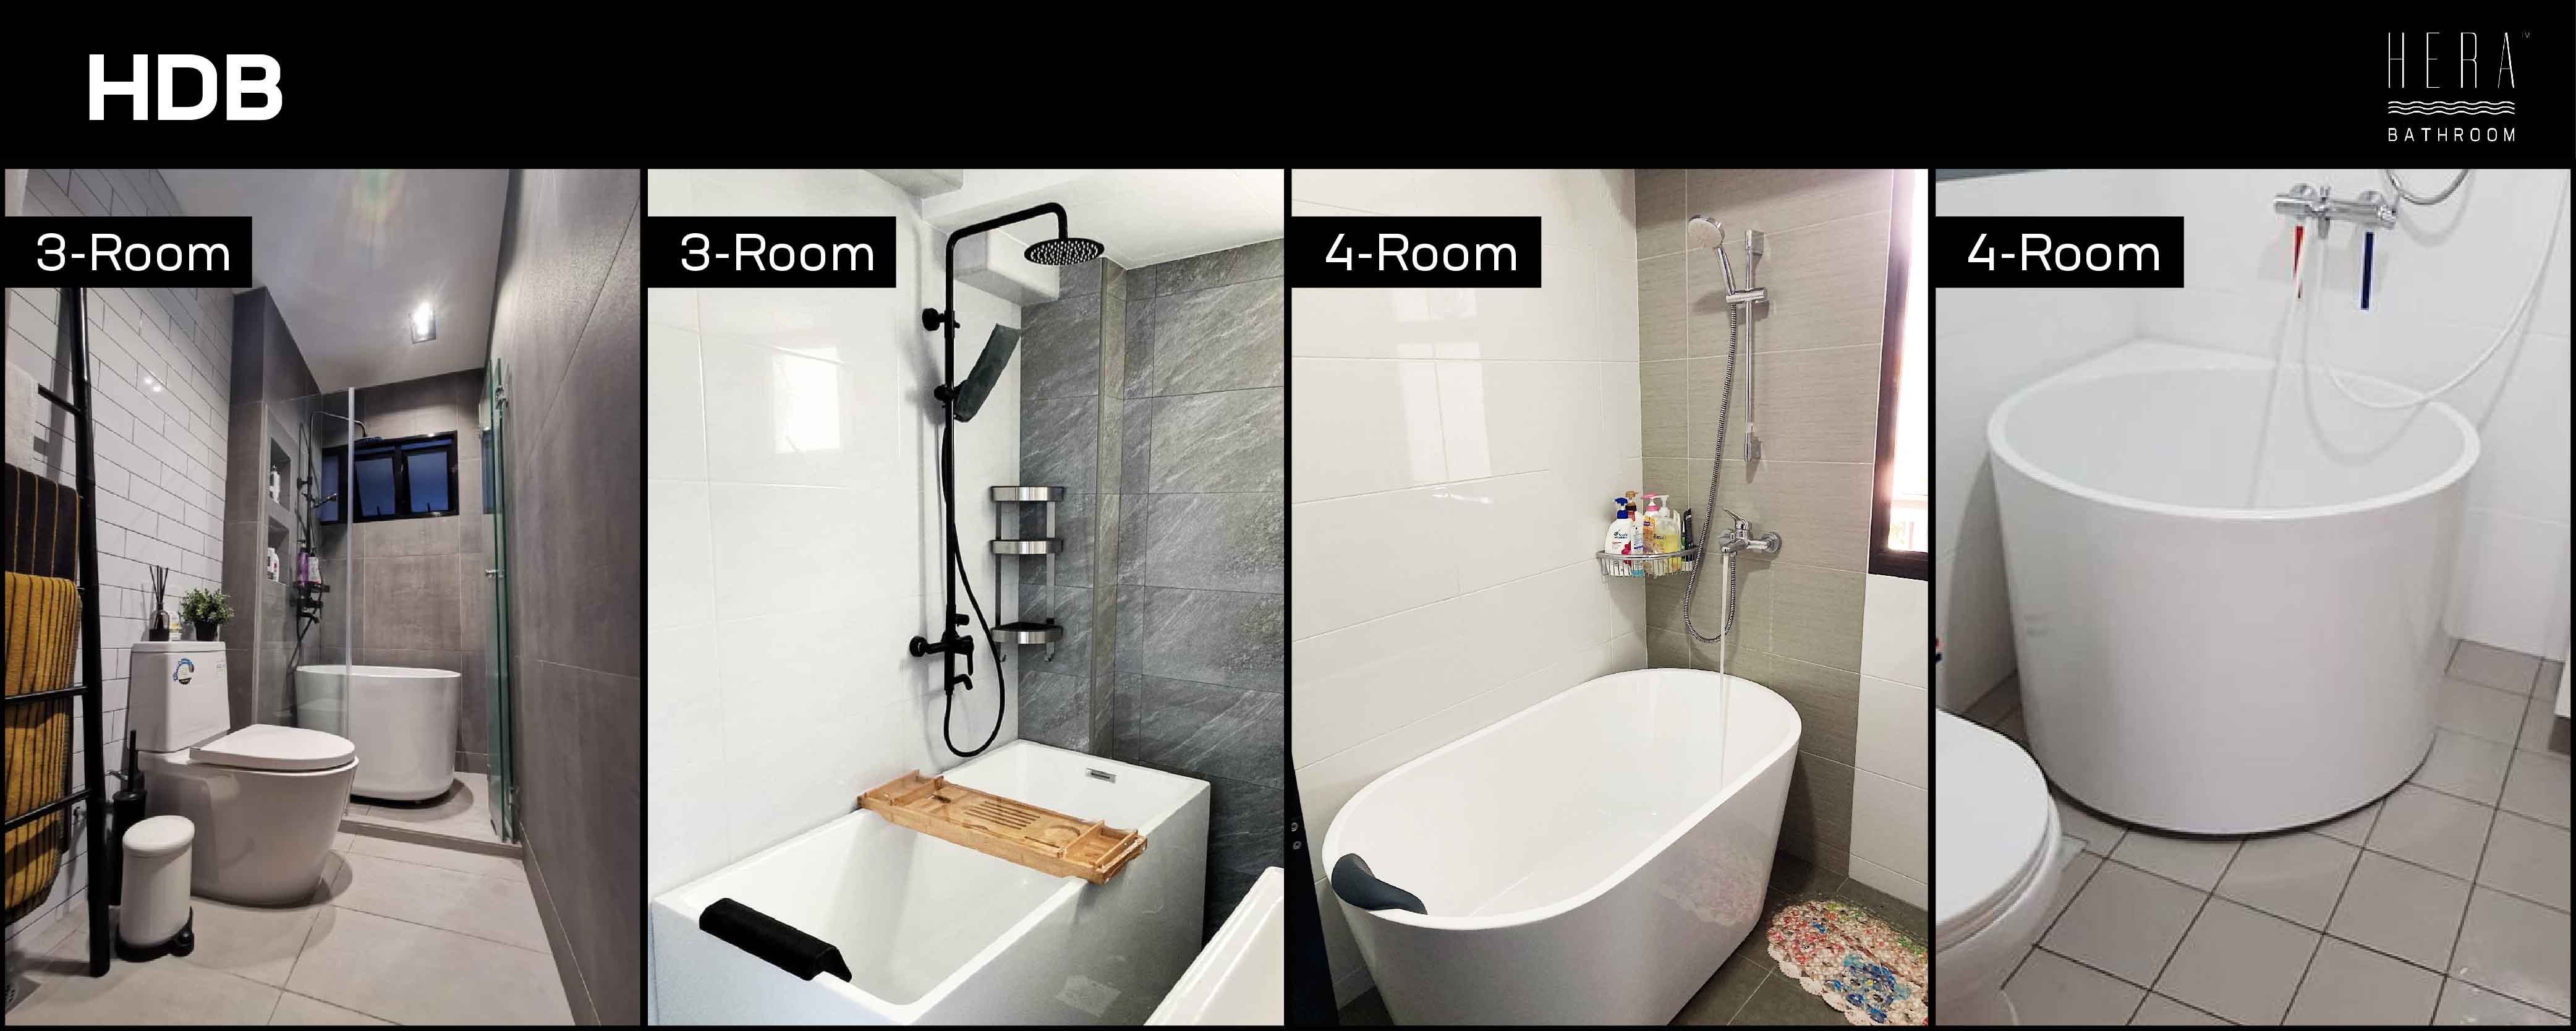 3-4 Room bathtubs